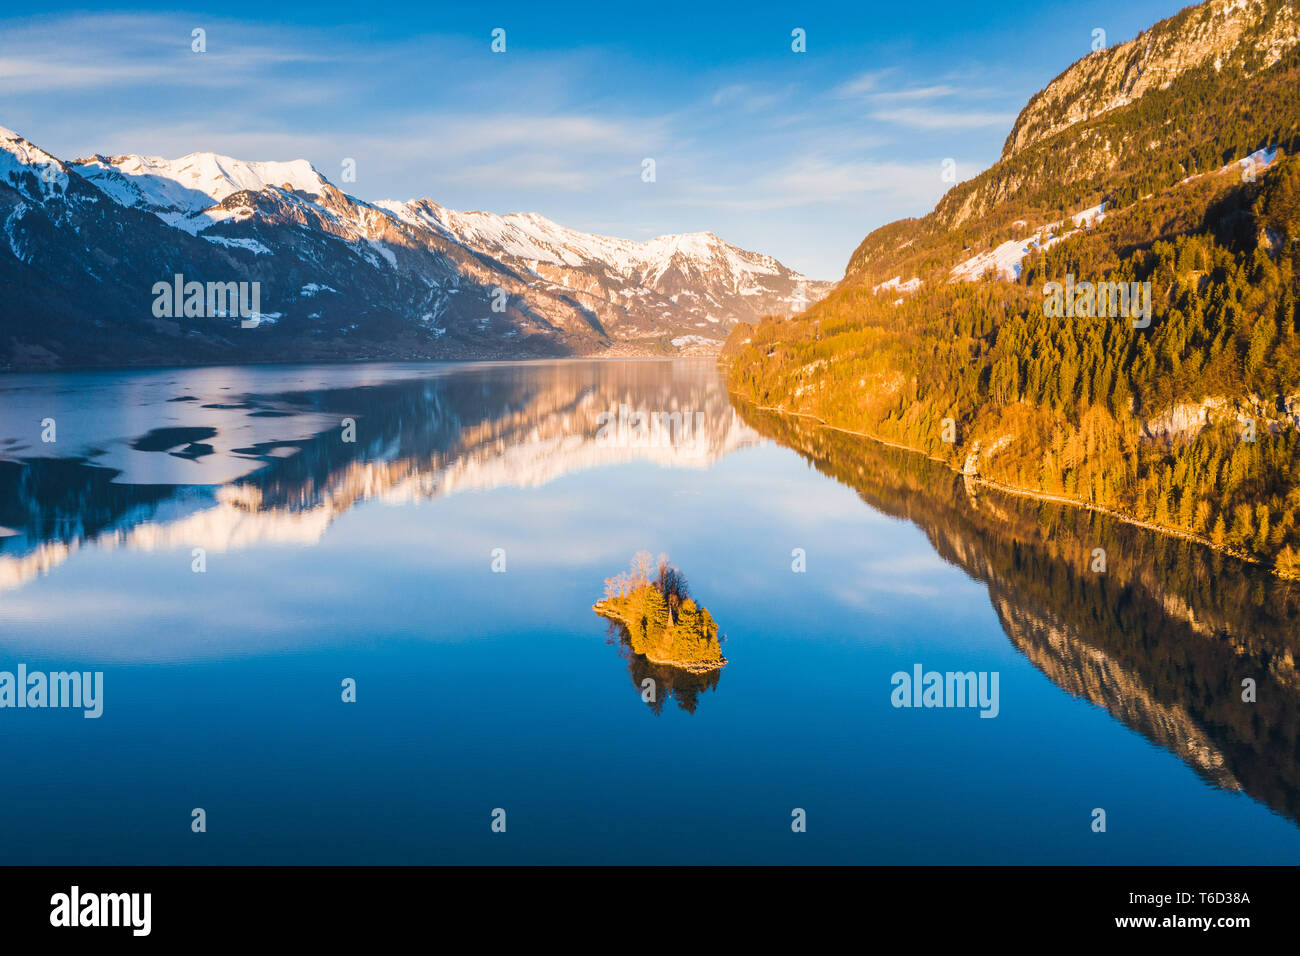 El lago de Brienz, Interlaken-Oberhasli, Berner Oberland, cantón de Berna, Suiza Foto de stock